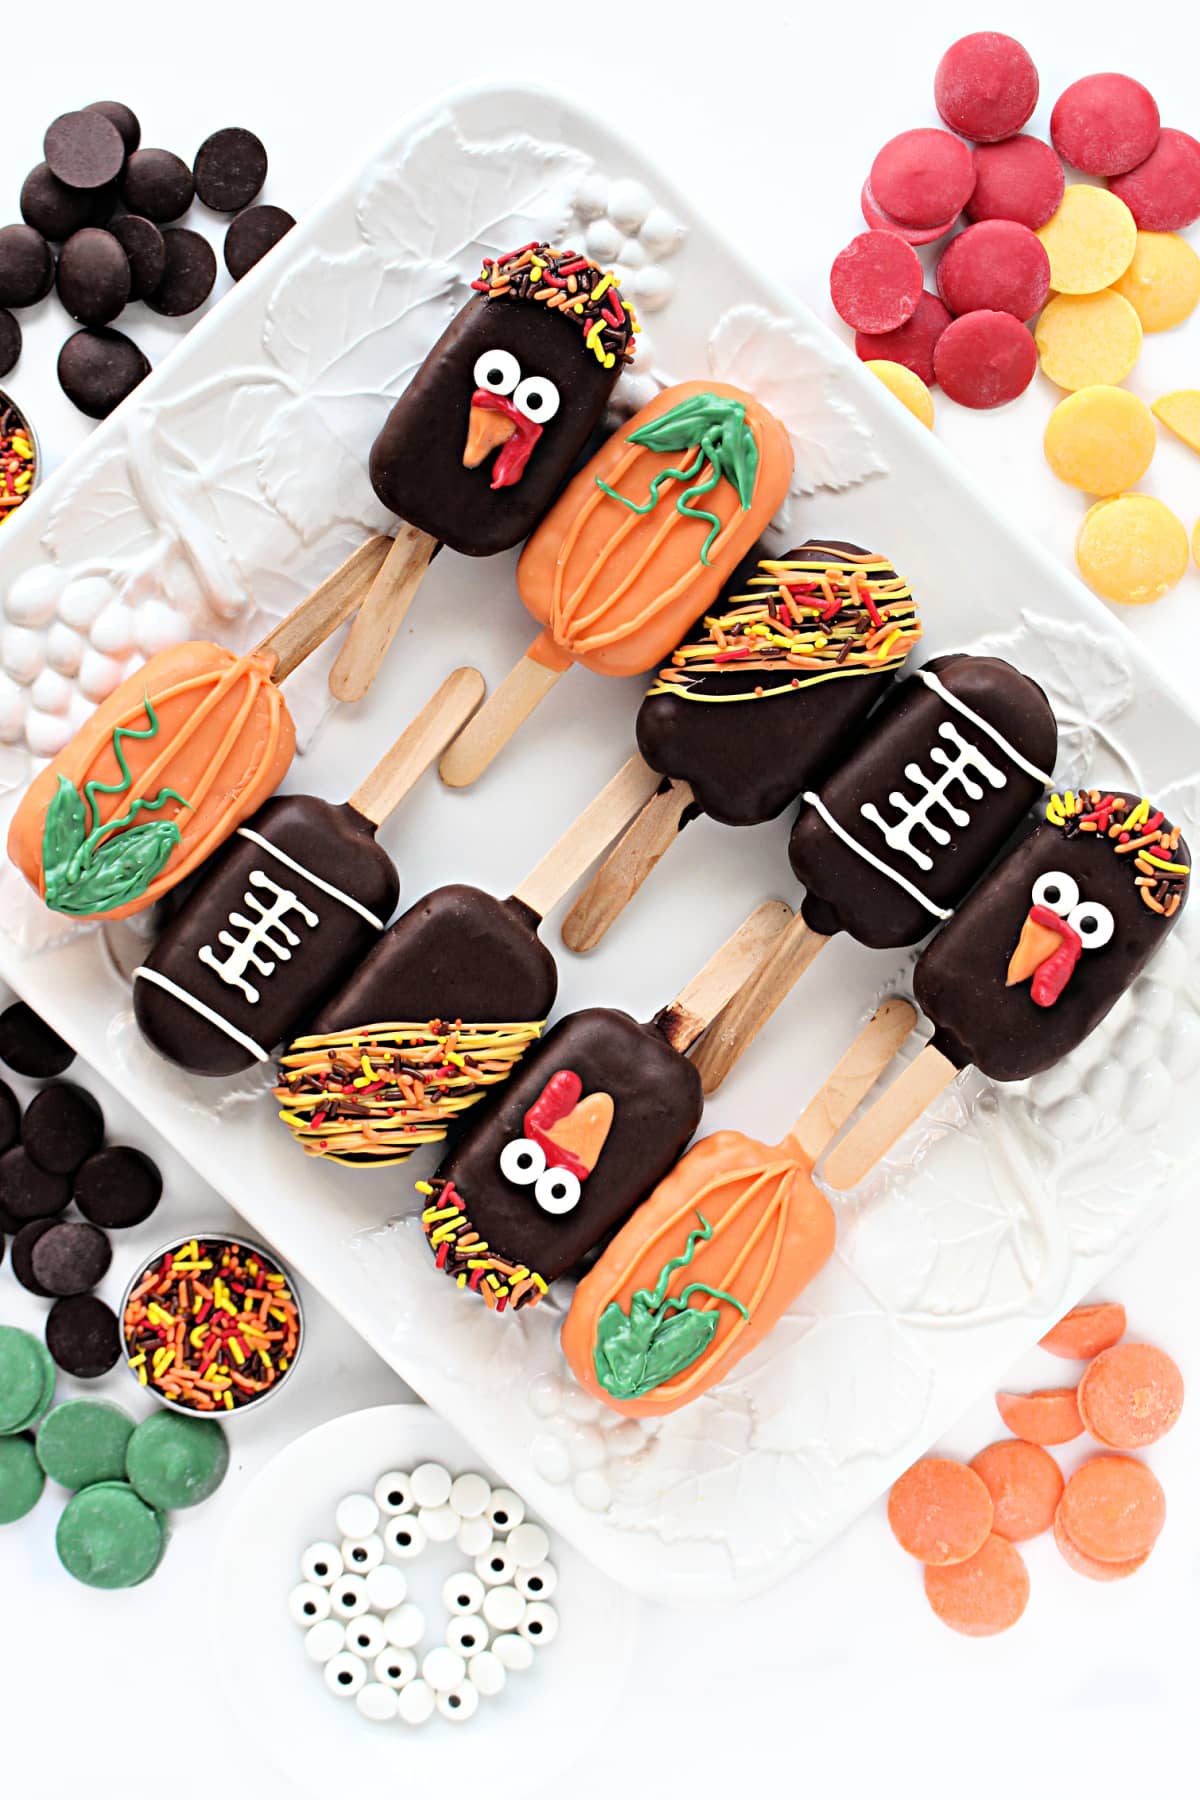 Chocolate coated Peanut Chews Candy Pops decorated like turkeys, pumpkins, and footballs.